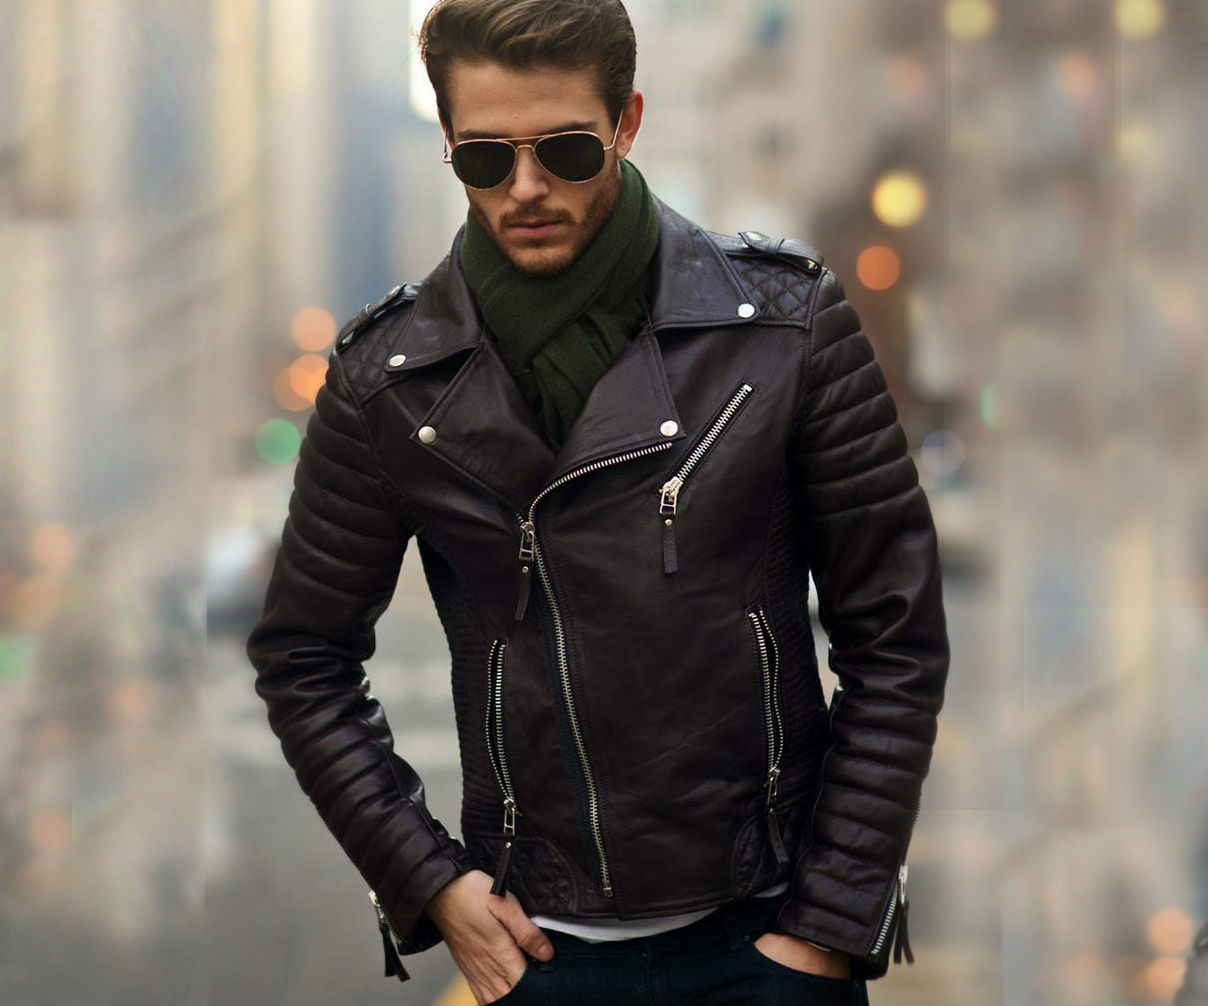 Куртка с поясом мужская. Косуха Mens cool Quilted Biker Black real Moto Leather Jacket. Boda Skins куртка мужская. Zara 2022 косуха мужская. Кожаные куртки 2022 2023 мужские.